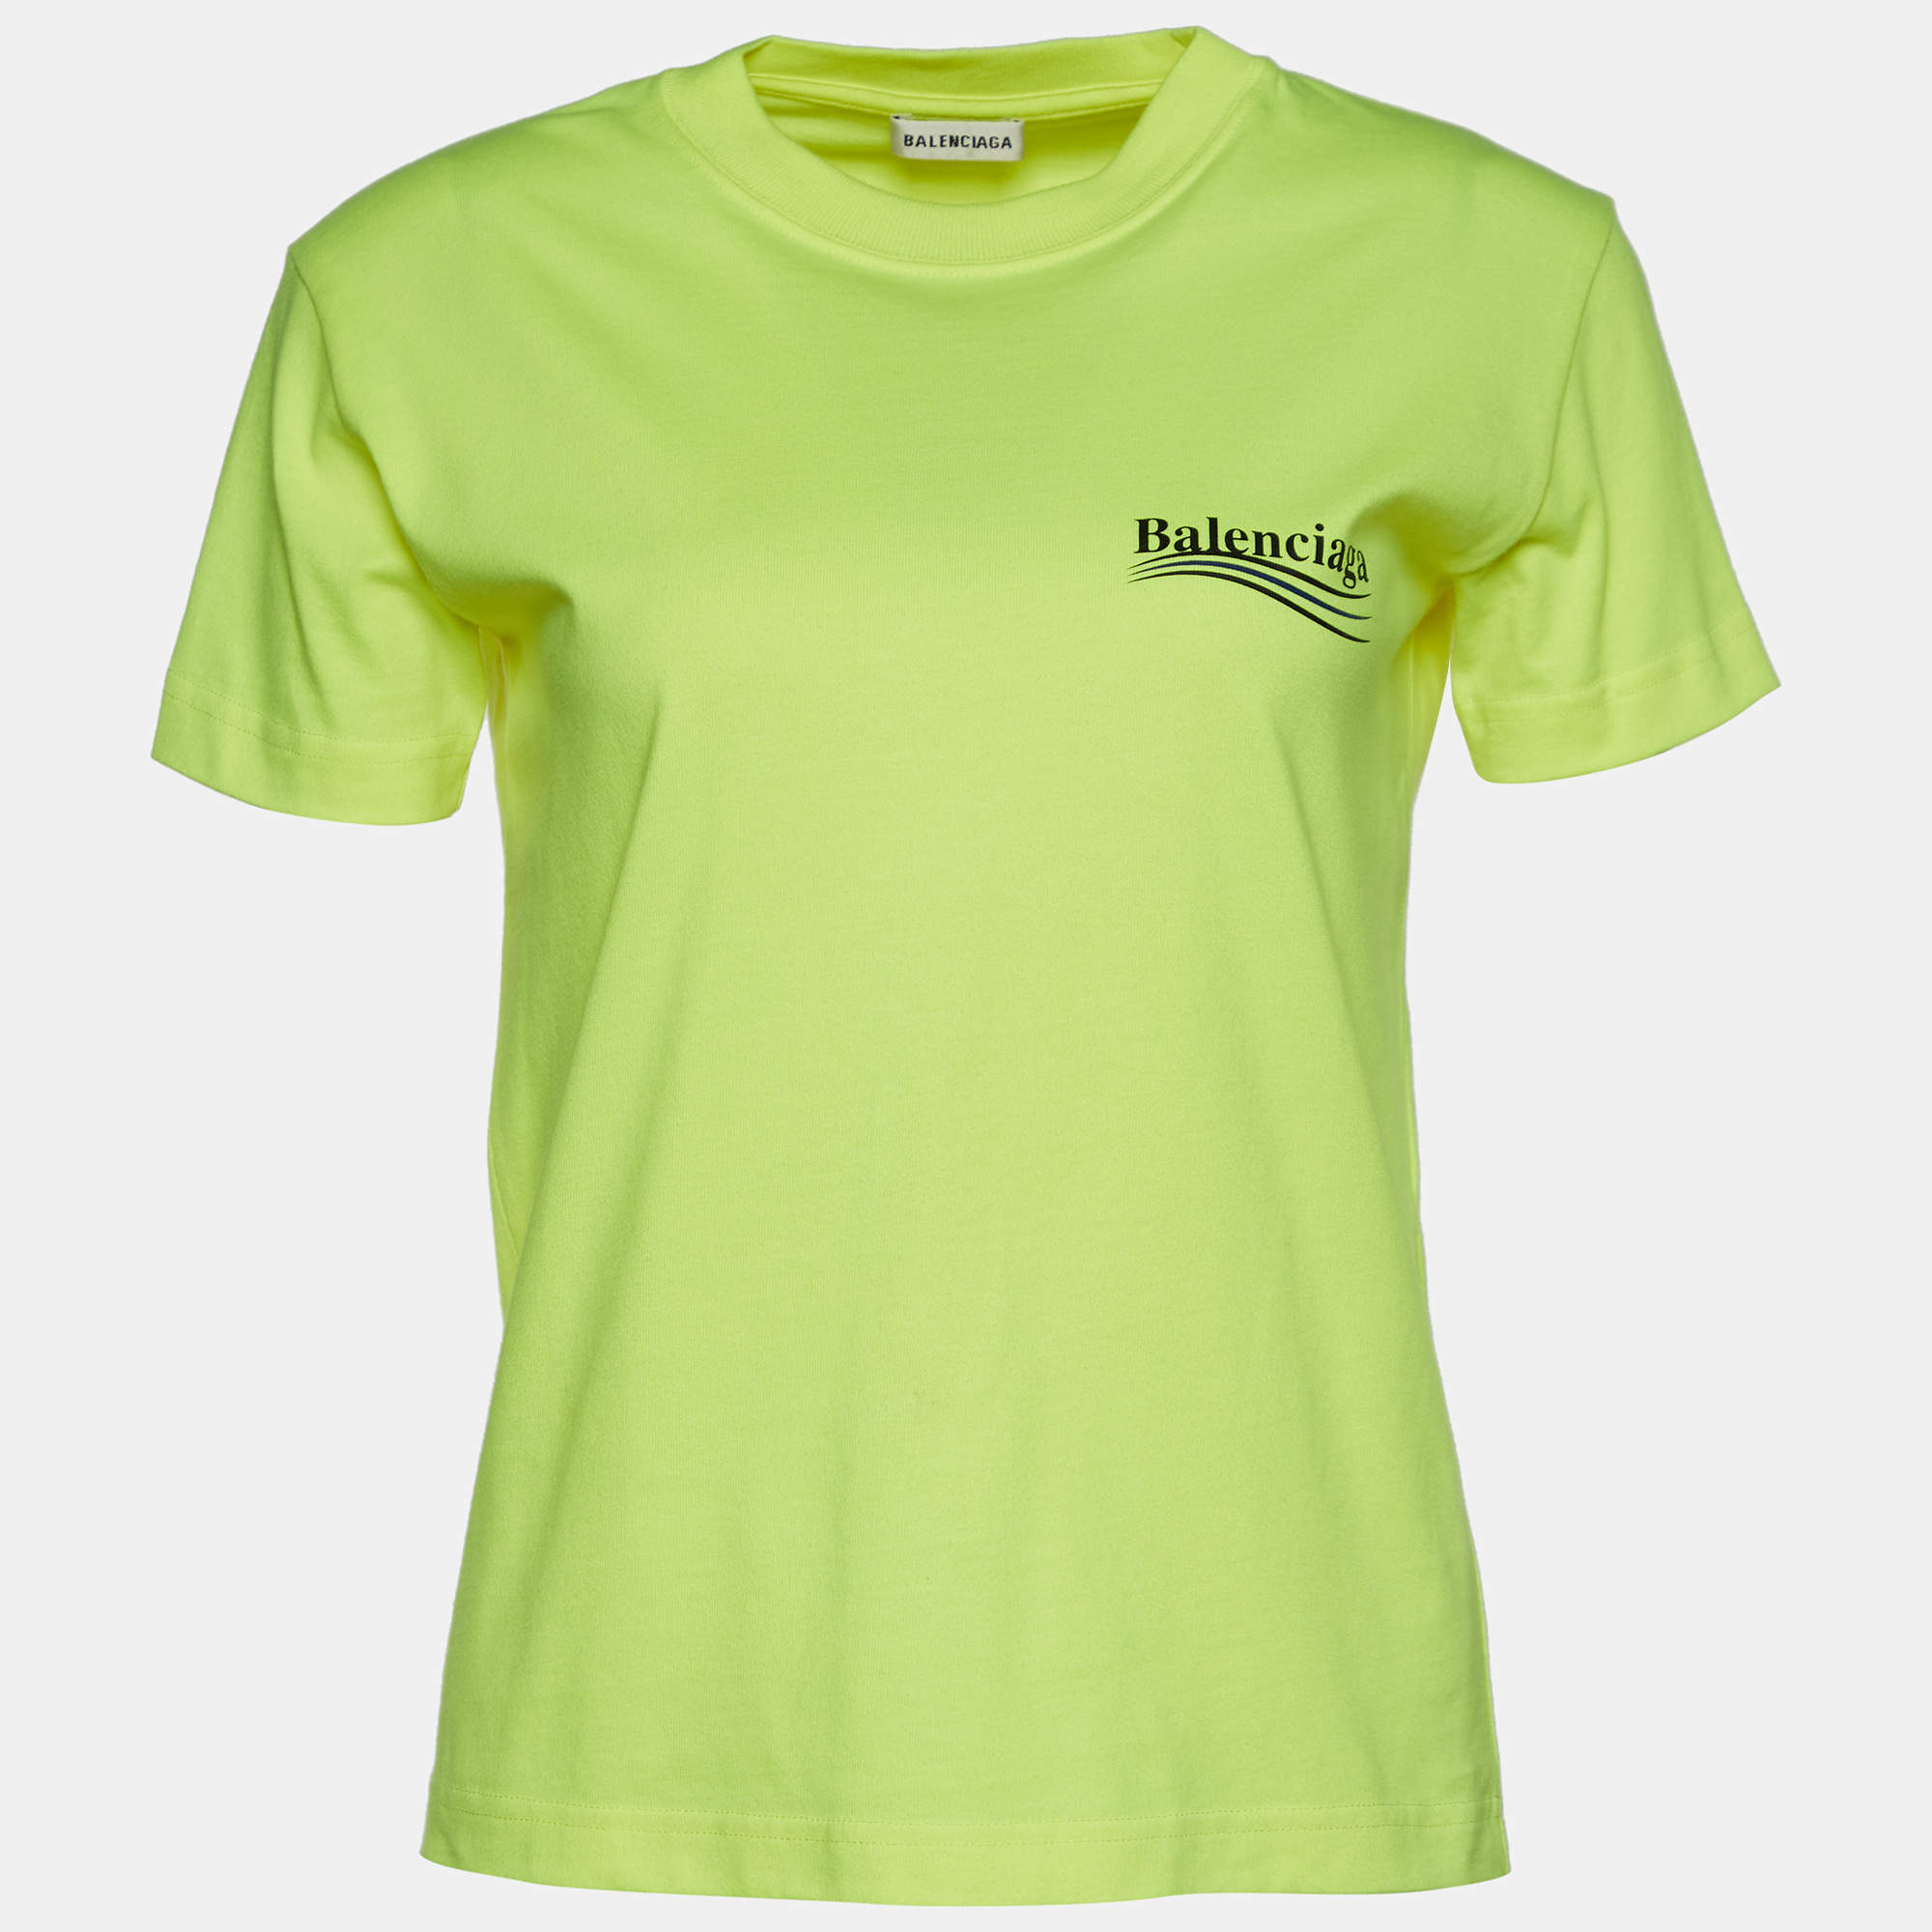 Buy Balenciaga Kids men black printed cotton tshirt for 114 online on  SV77 5561551000